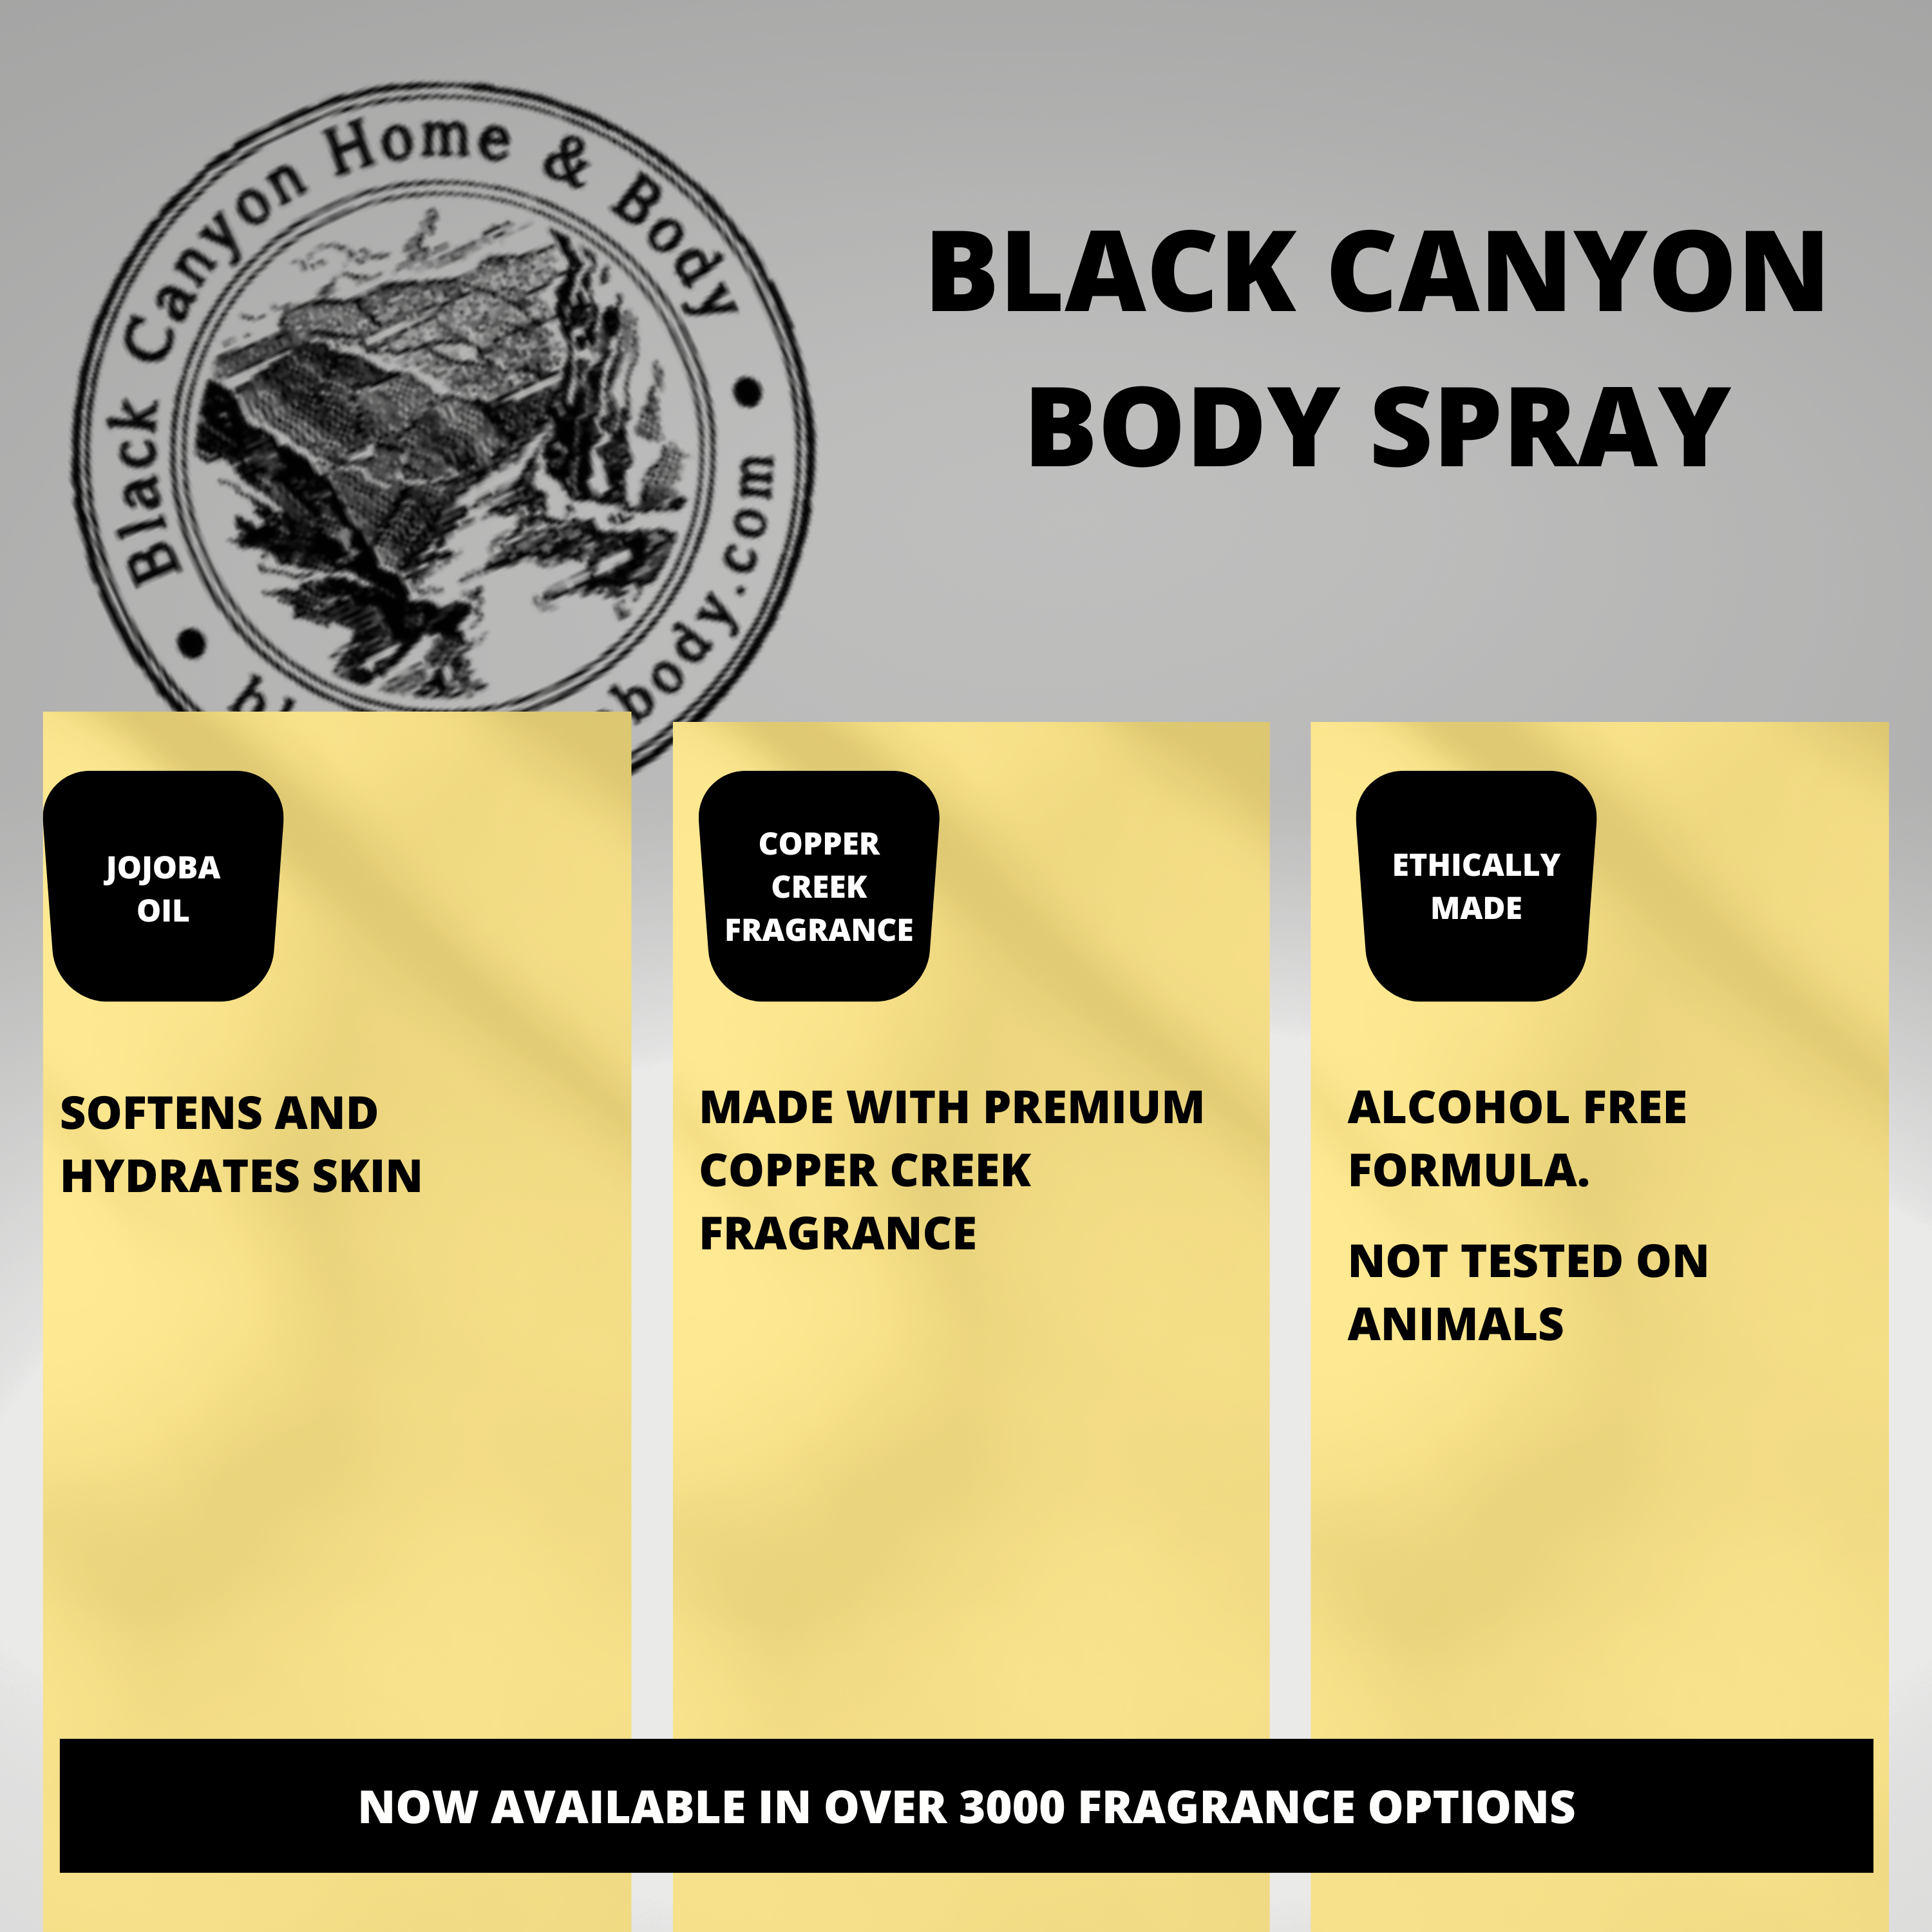 Black Canyon Wintergreen Alps Scented Body Spray